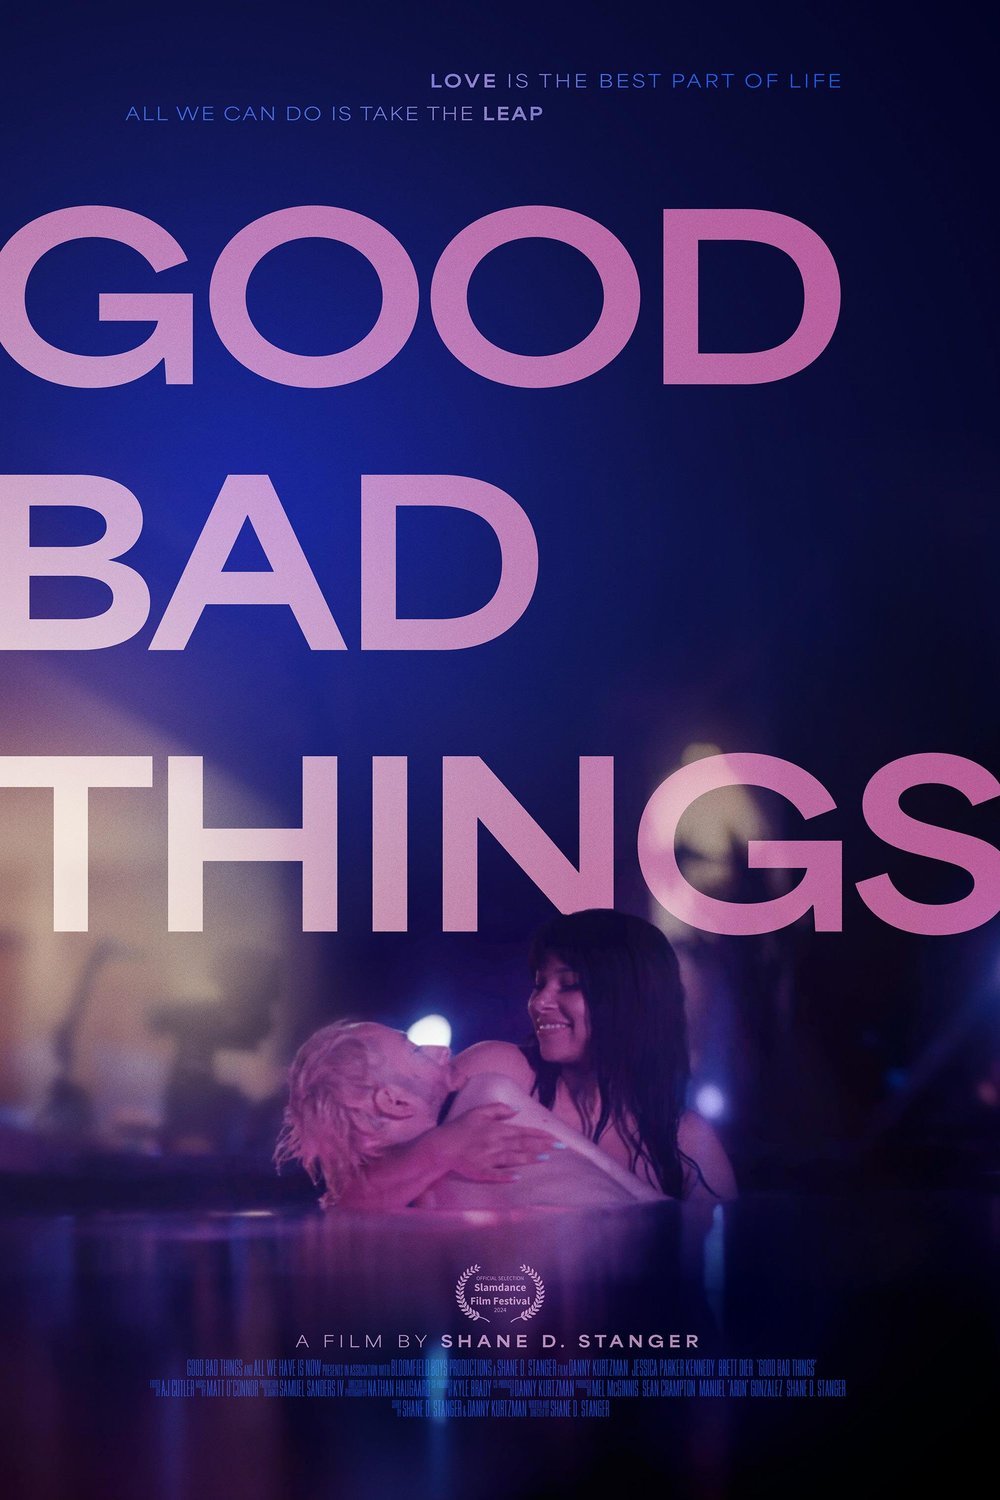 L'affiche du film Good Bad Things